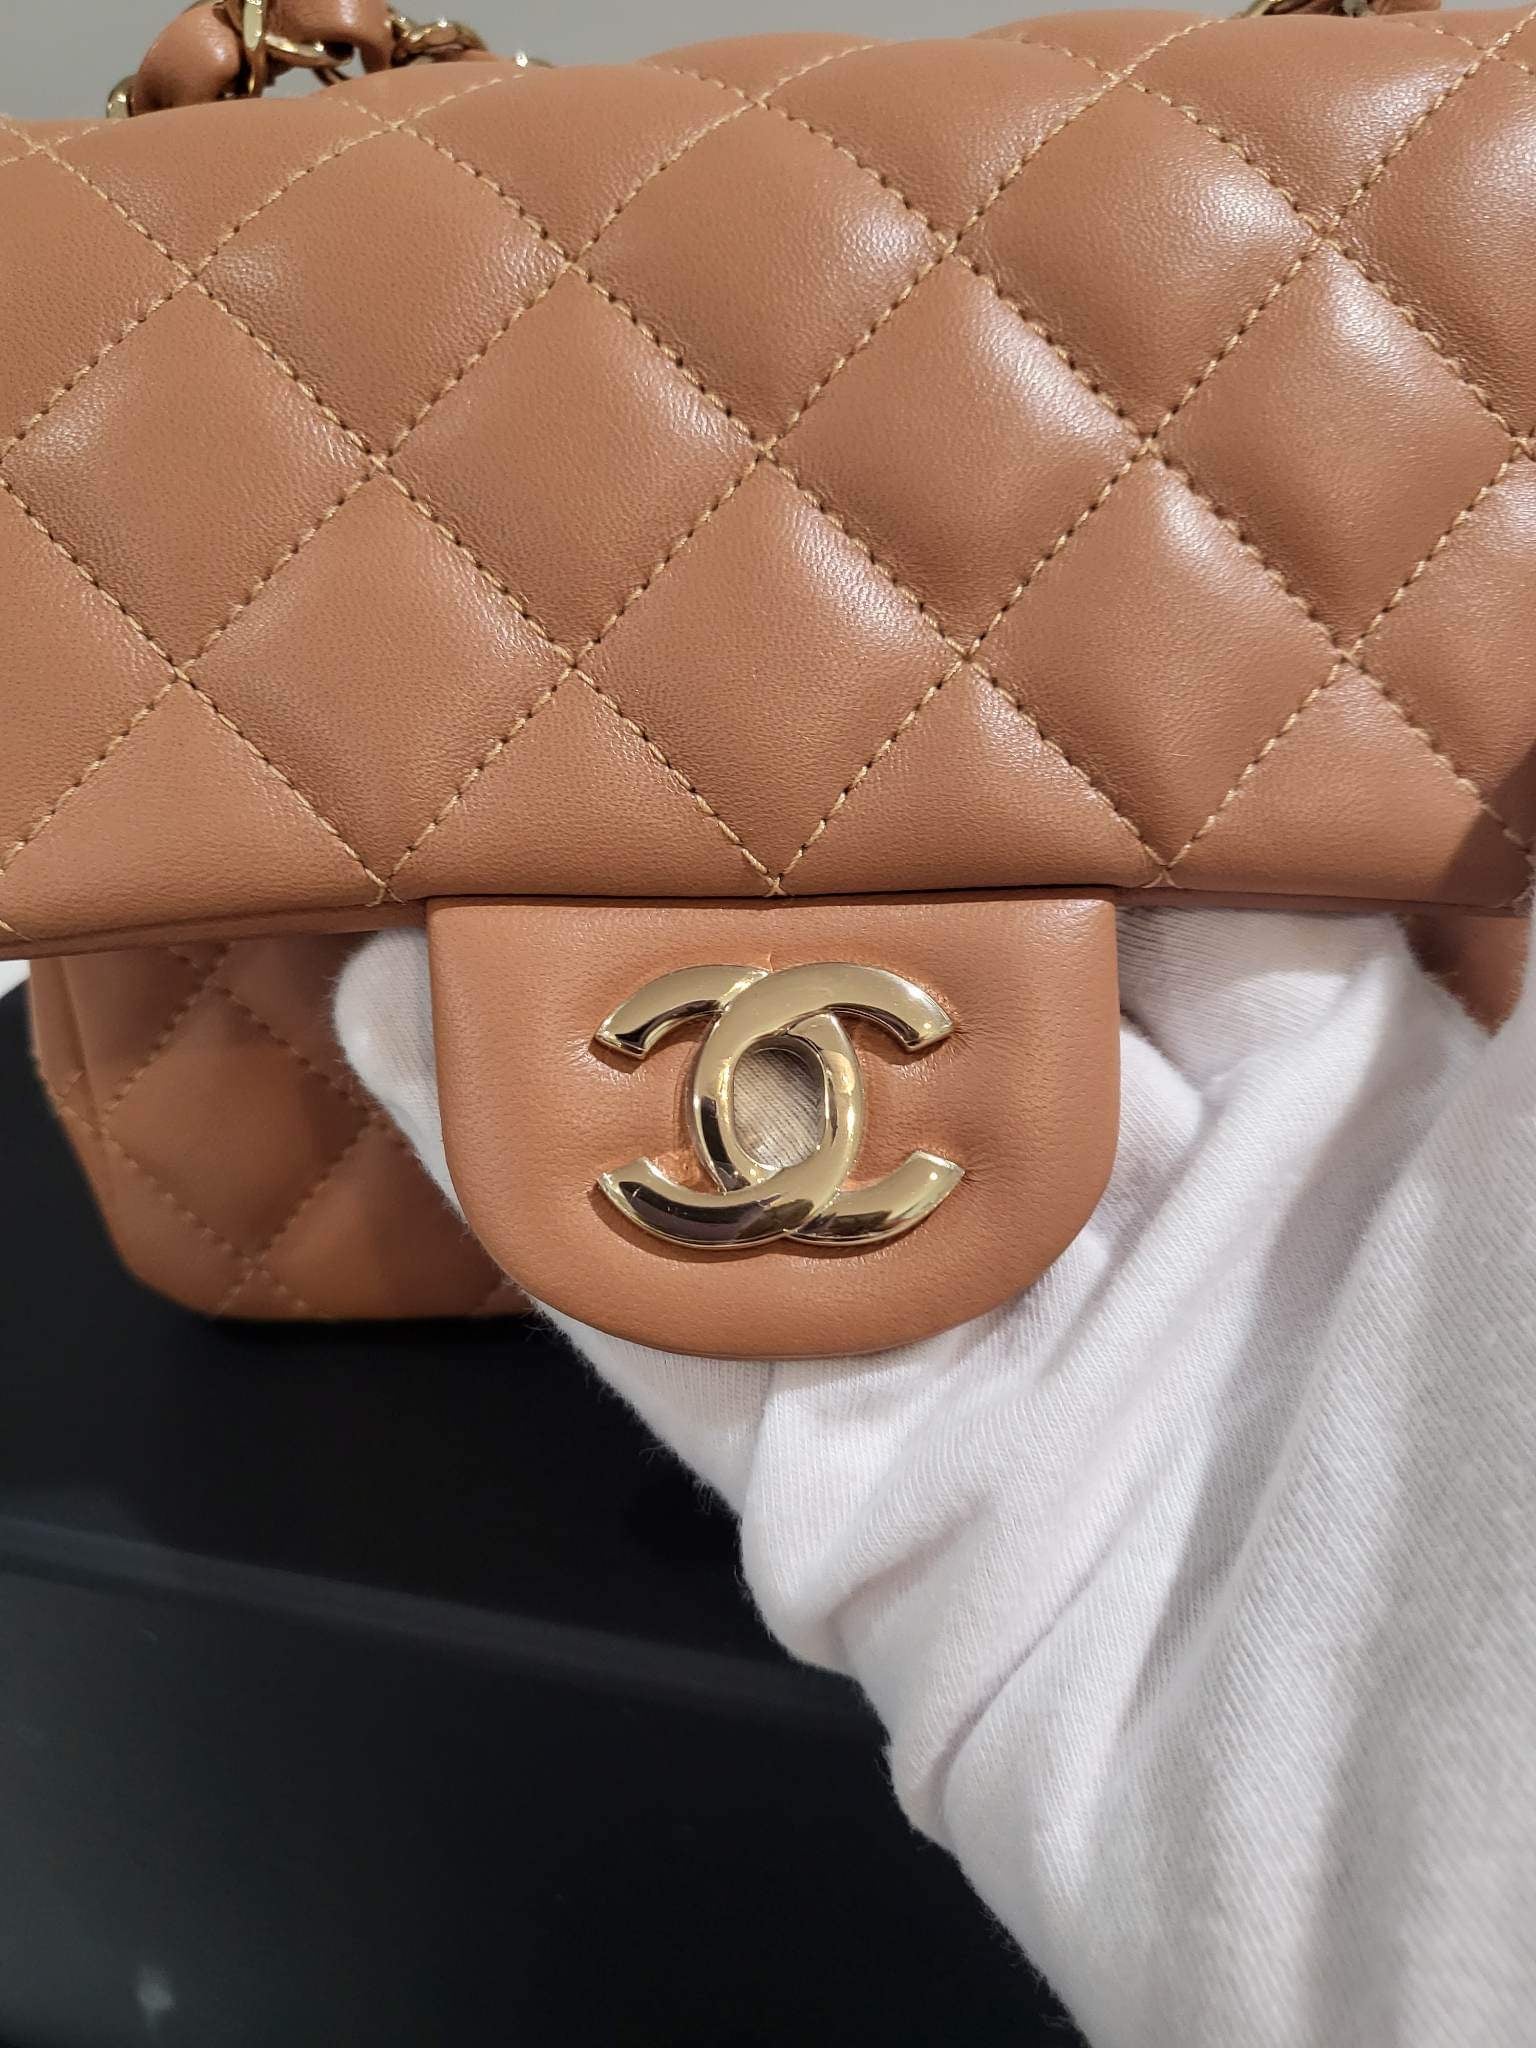 Chanel Classic Lambskin Beige Tan Bag -  Norway